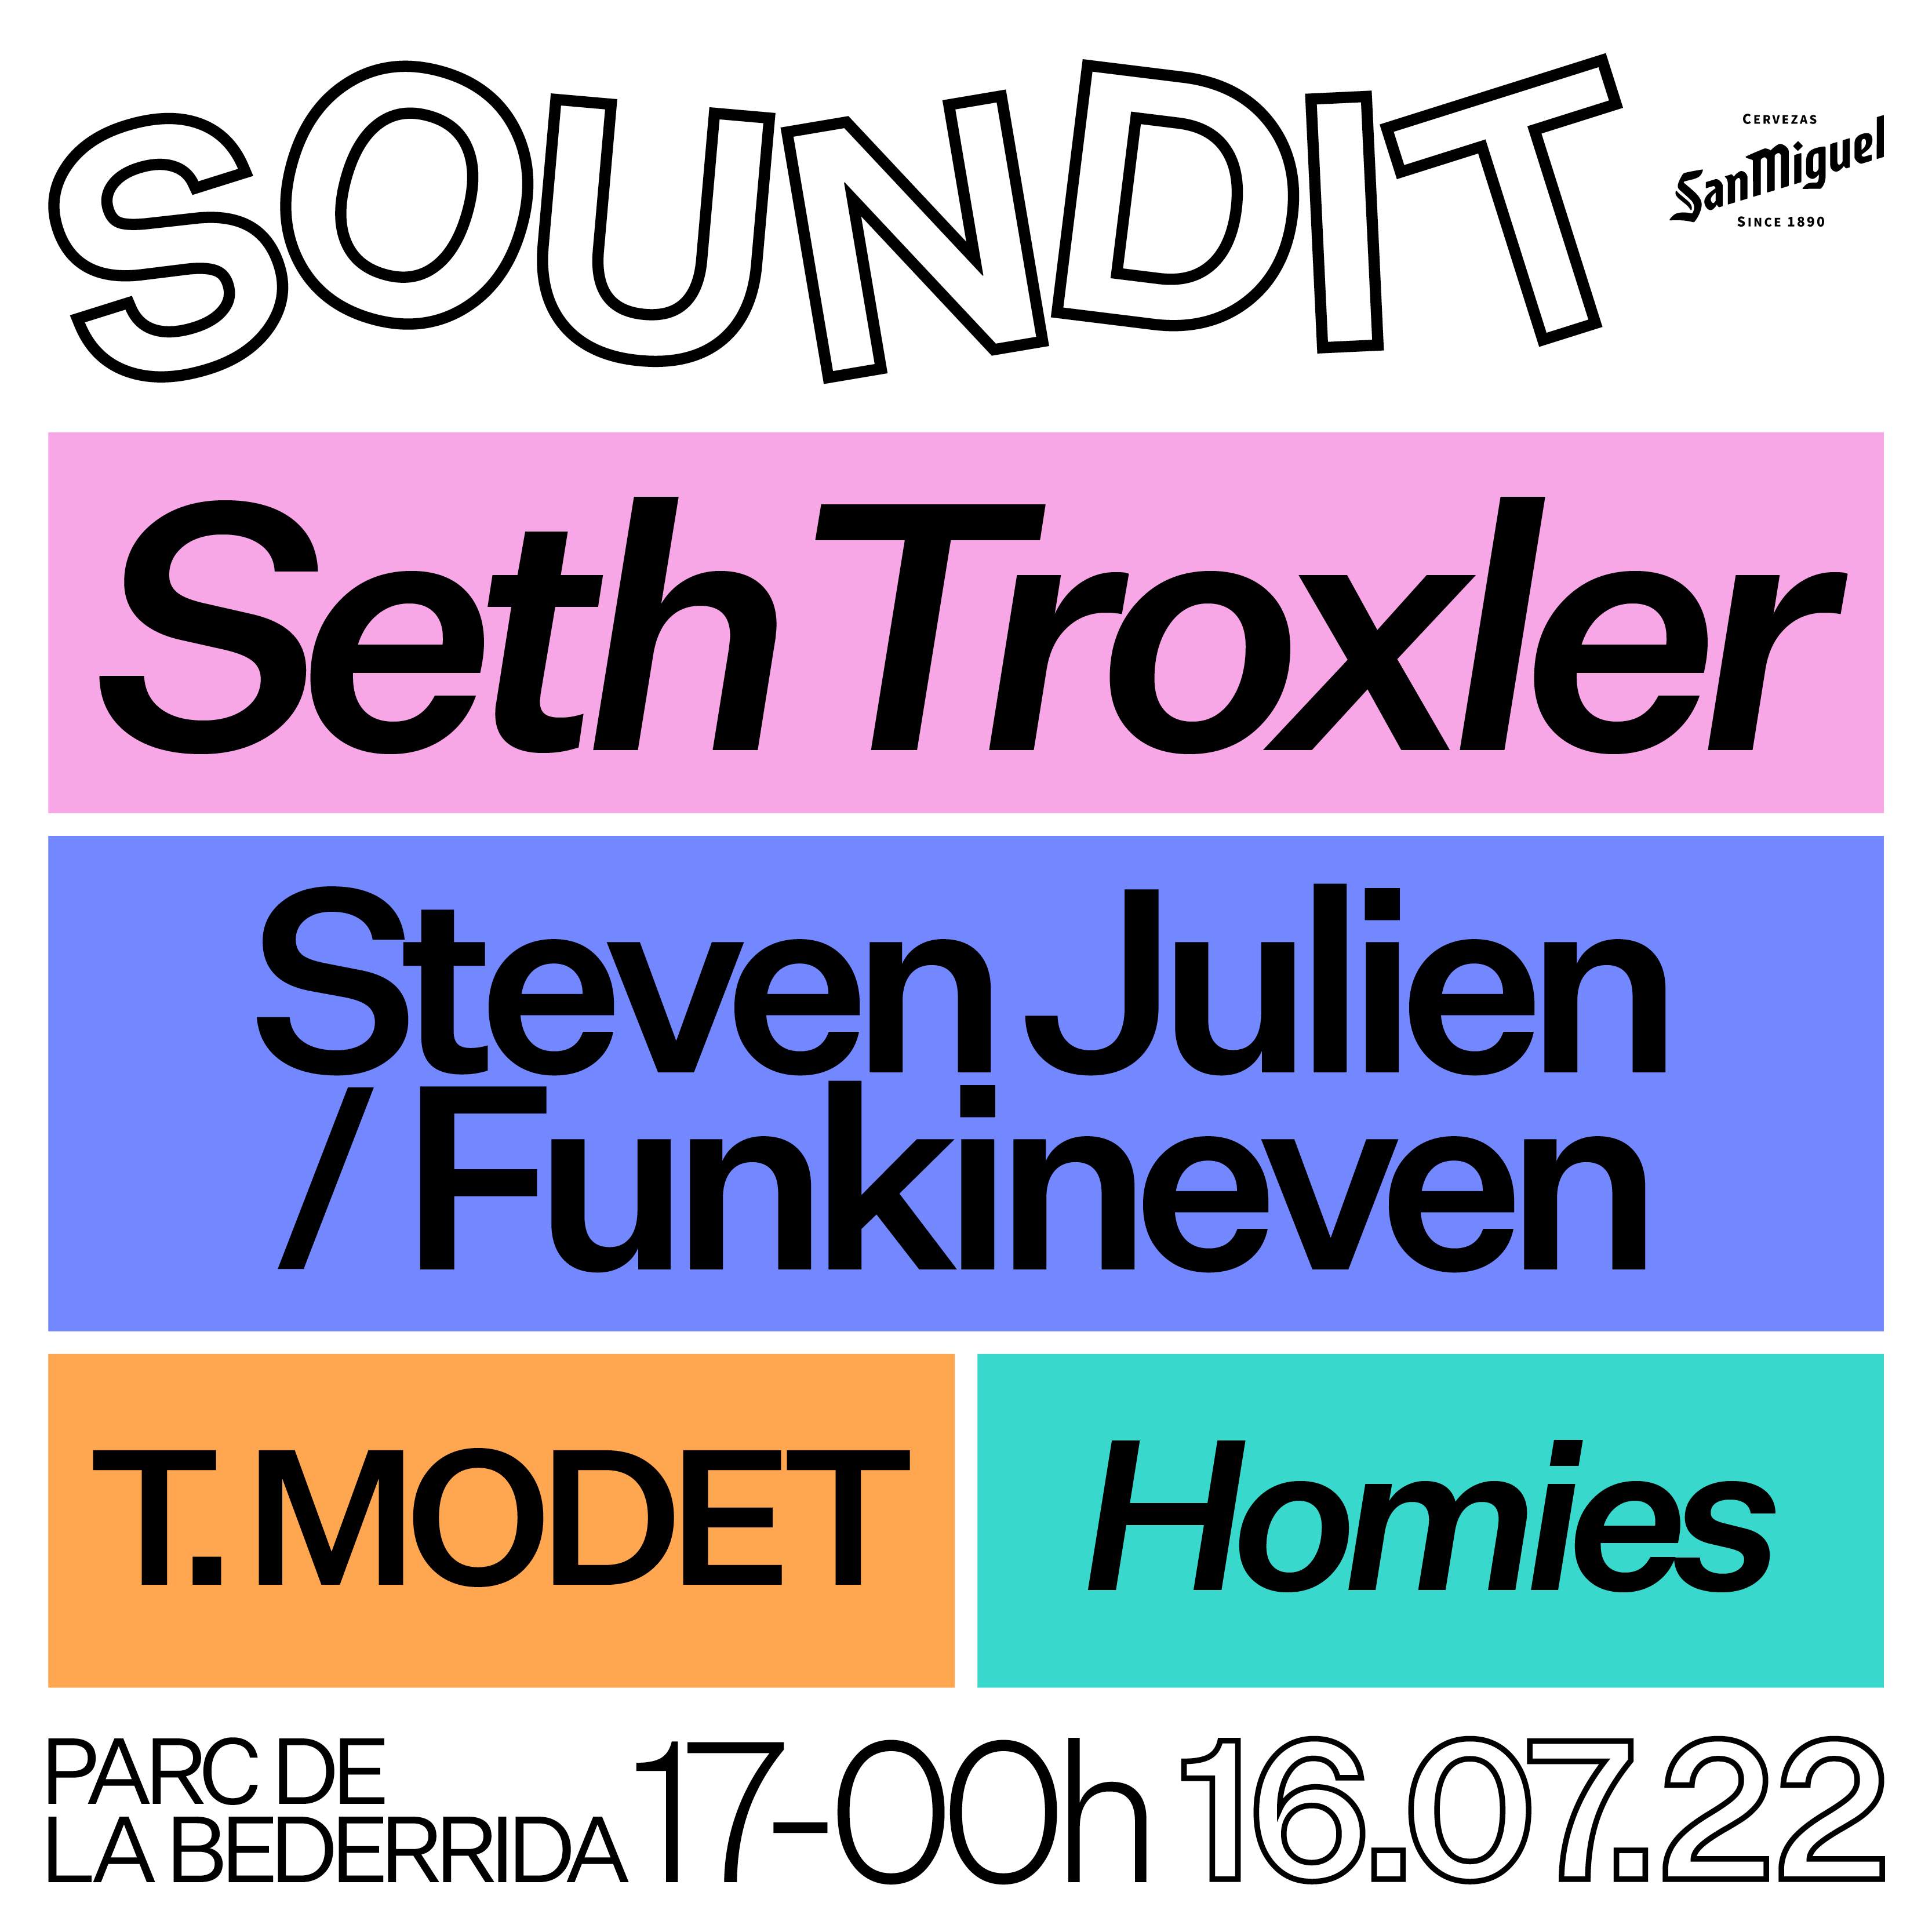 SOUNDIT: Seth Troxler, Steven Julien/FunkinEven, T. Modet, Homies:Cristian Len & Camilo Miranda - Página trasera